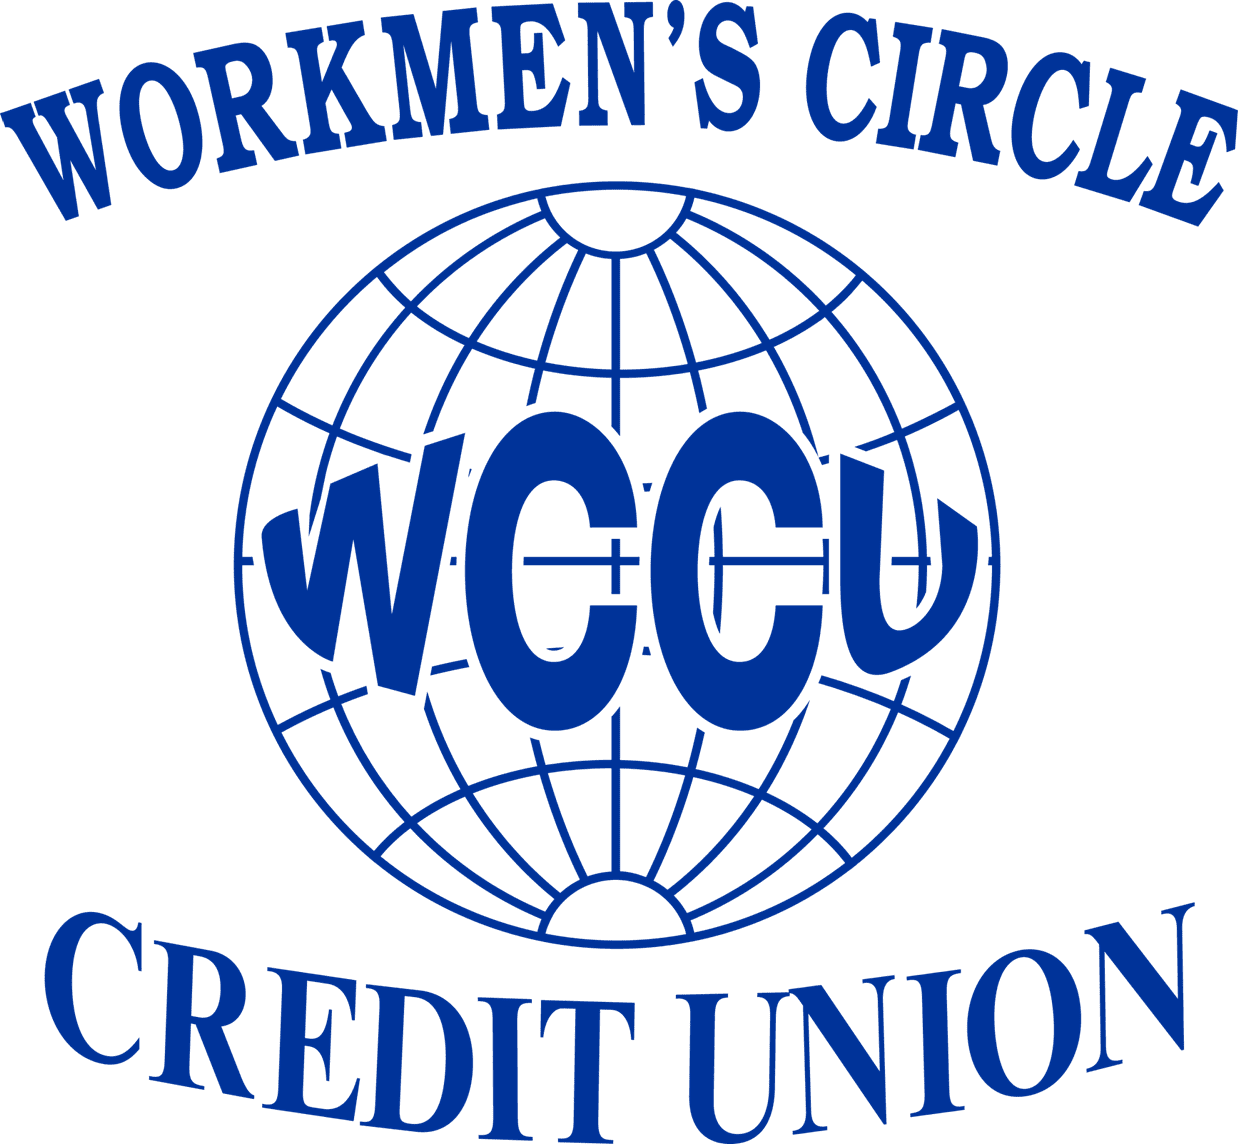 Workmens Circle